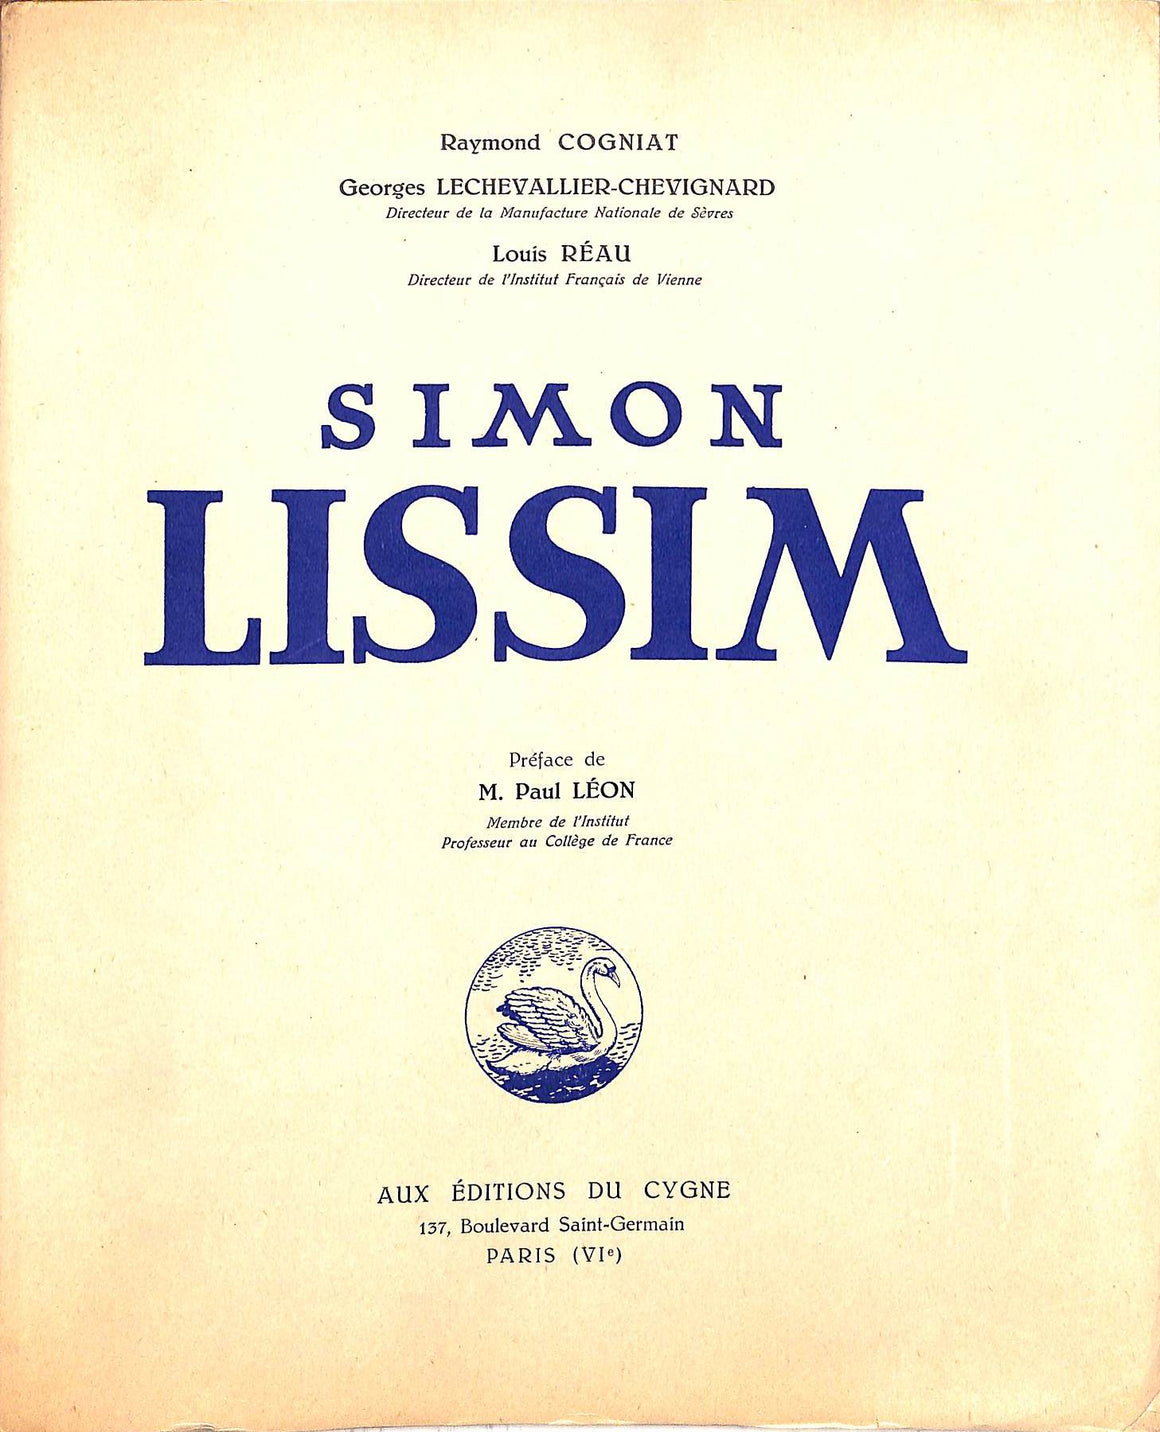 "Simon Lissim" 1933